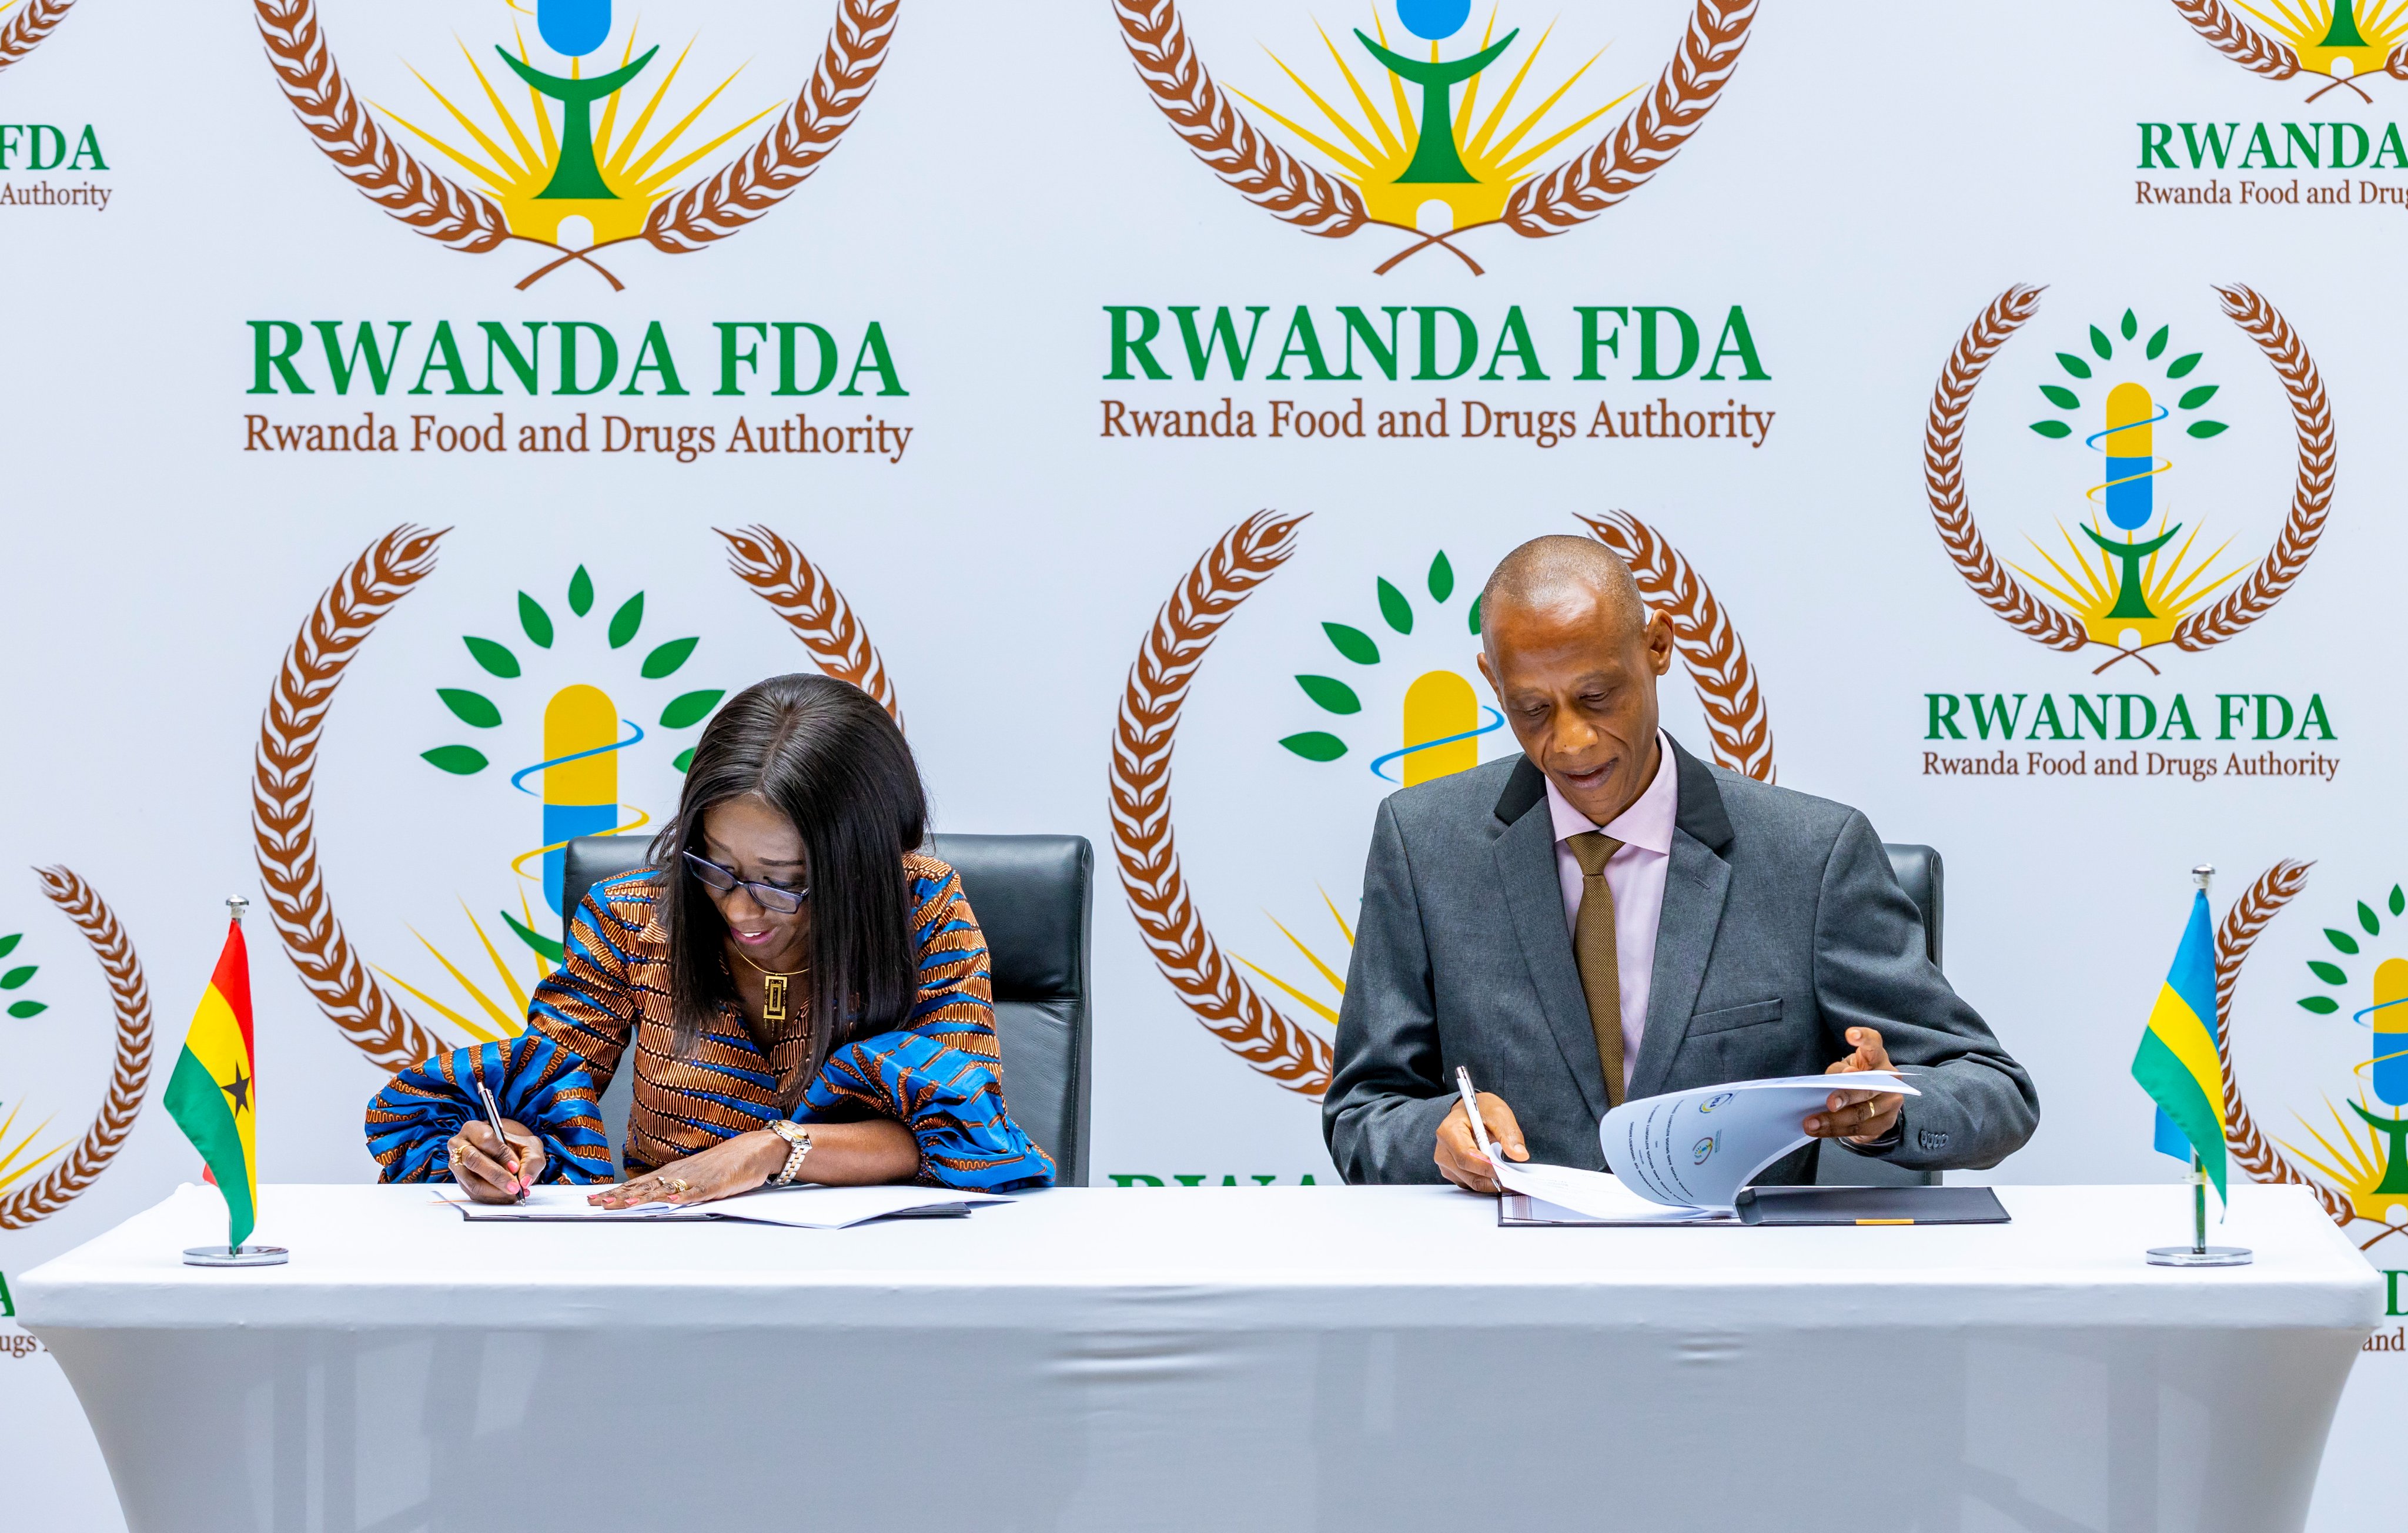 Director-General of Rwanda FDA, Dr. Emile Bienvenu, and Delese Mimi Darko, Chief Executive Officer of Ghana FDA sign the agreement in Kigali on June 24.